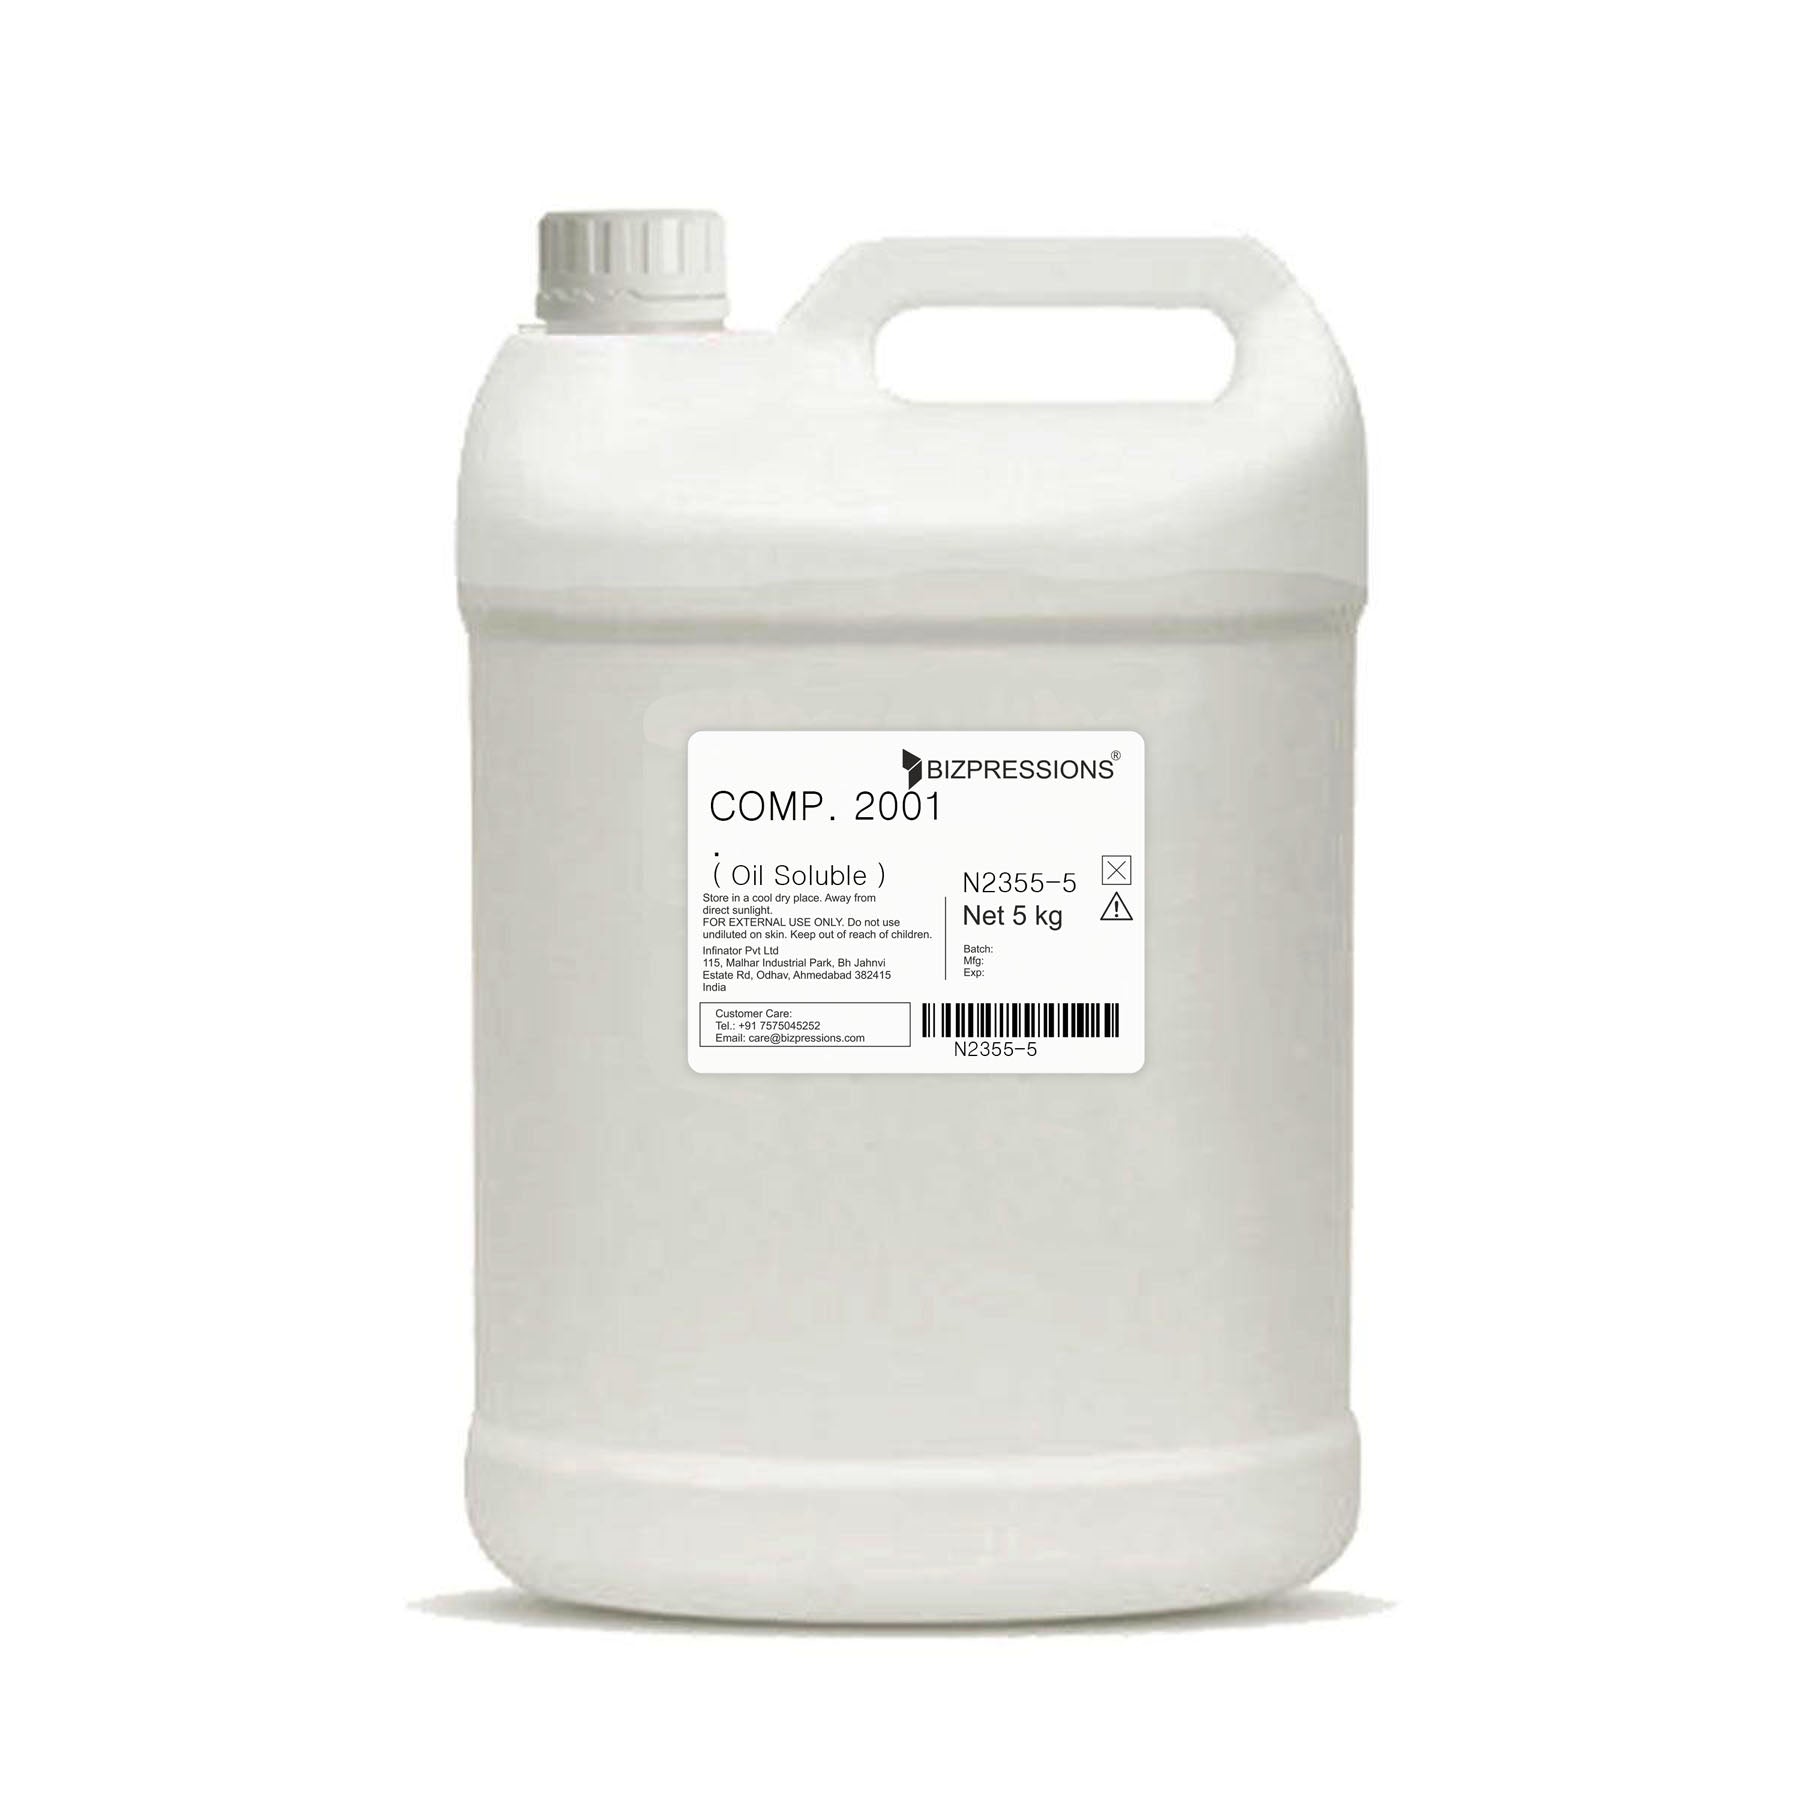 COMP. 2001 - Fragrance ( Oil Soluble ) - 5 kg